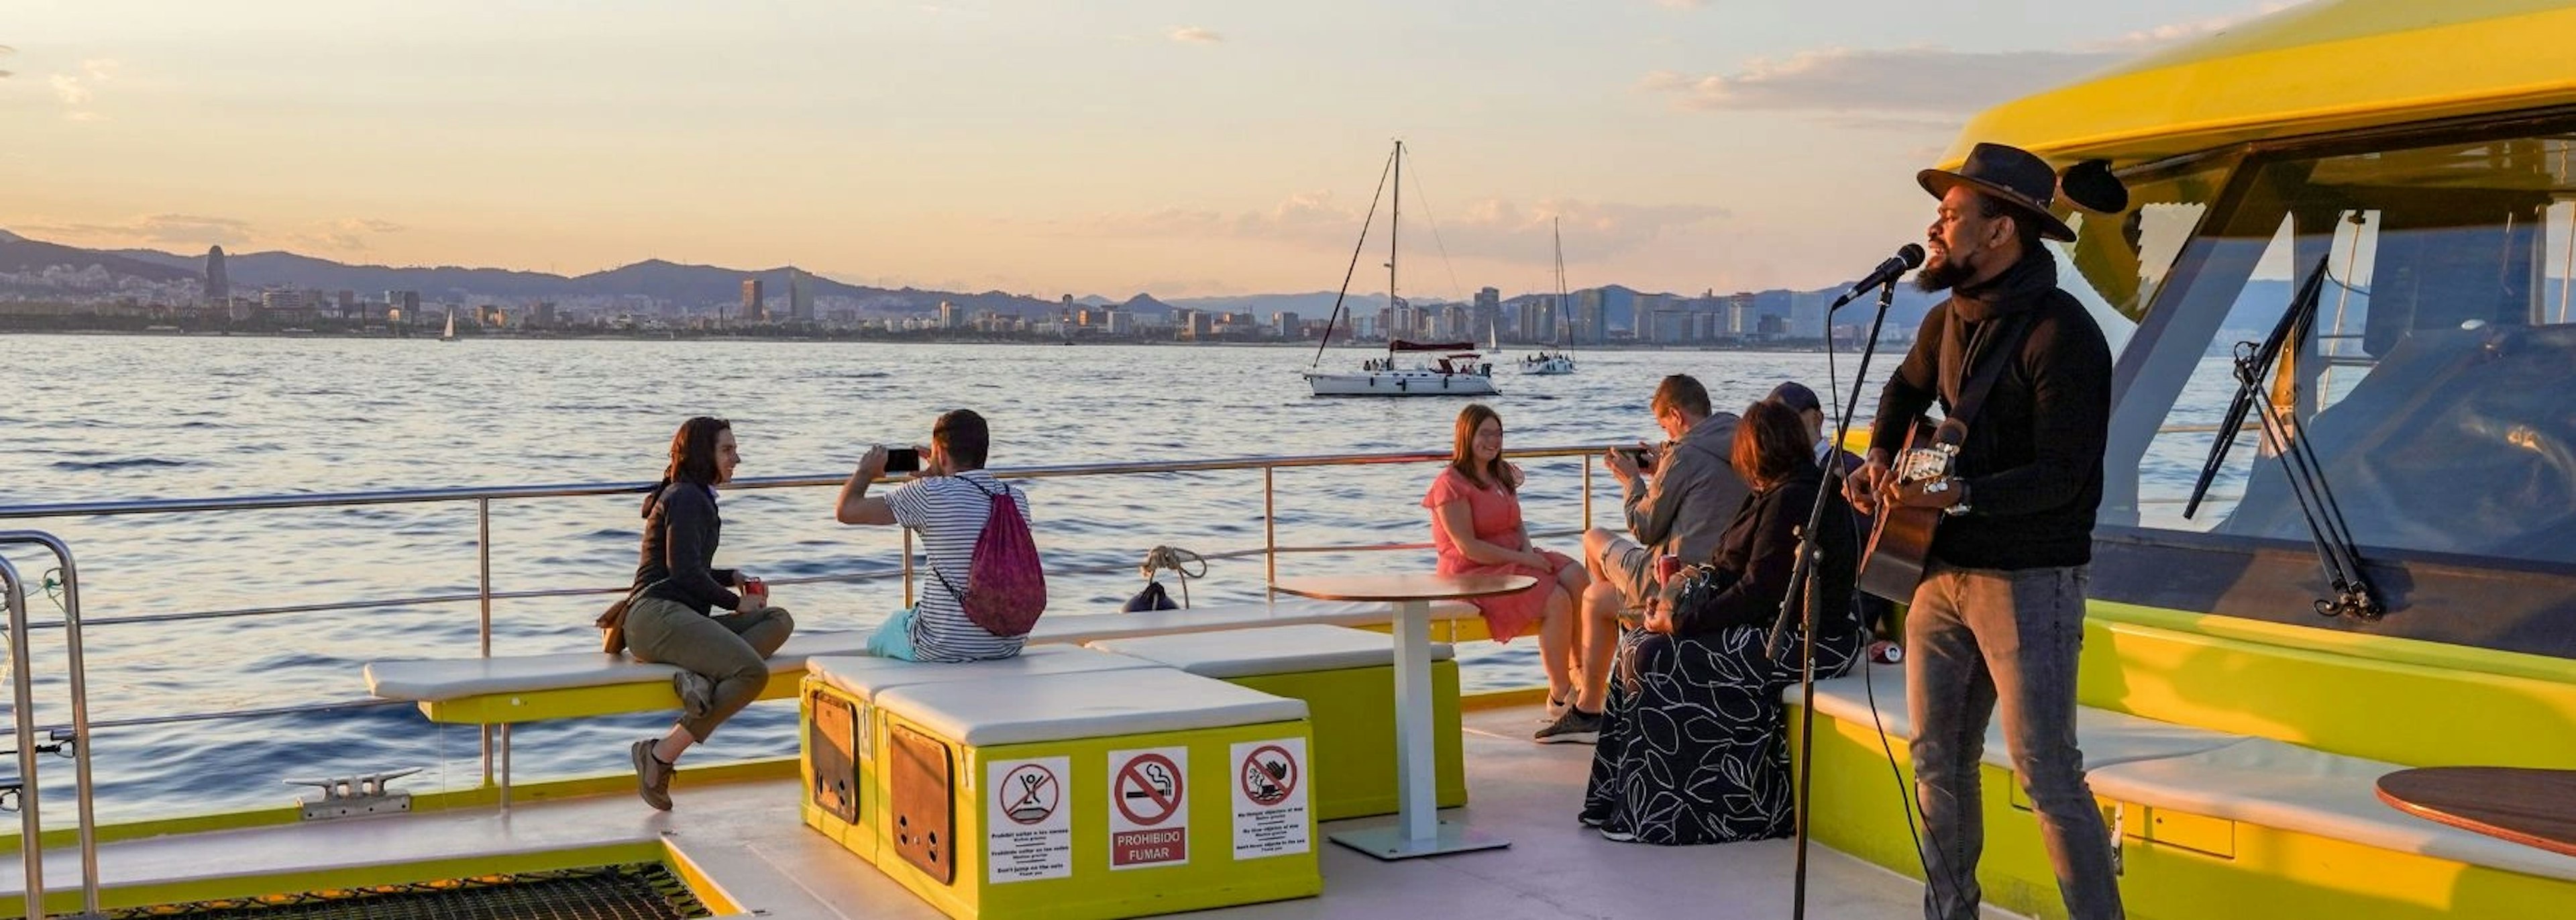 Navega a bordo de un catamarán ecológico de diseño con opción al atardecer y música en vivo